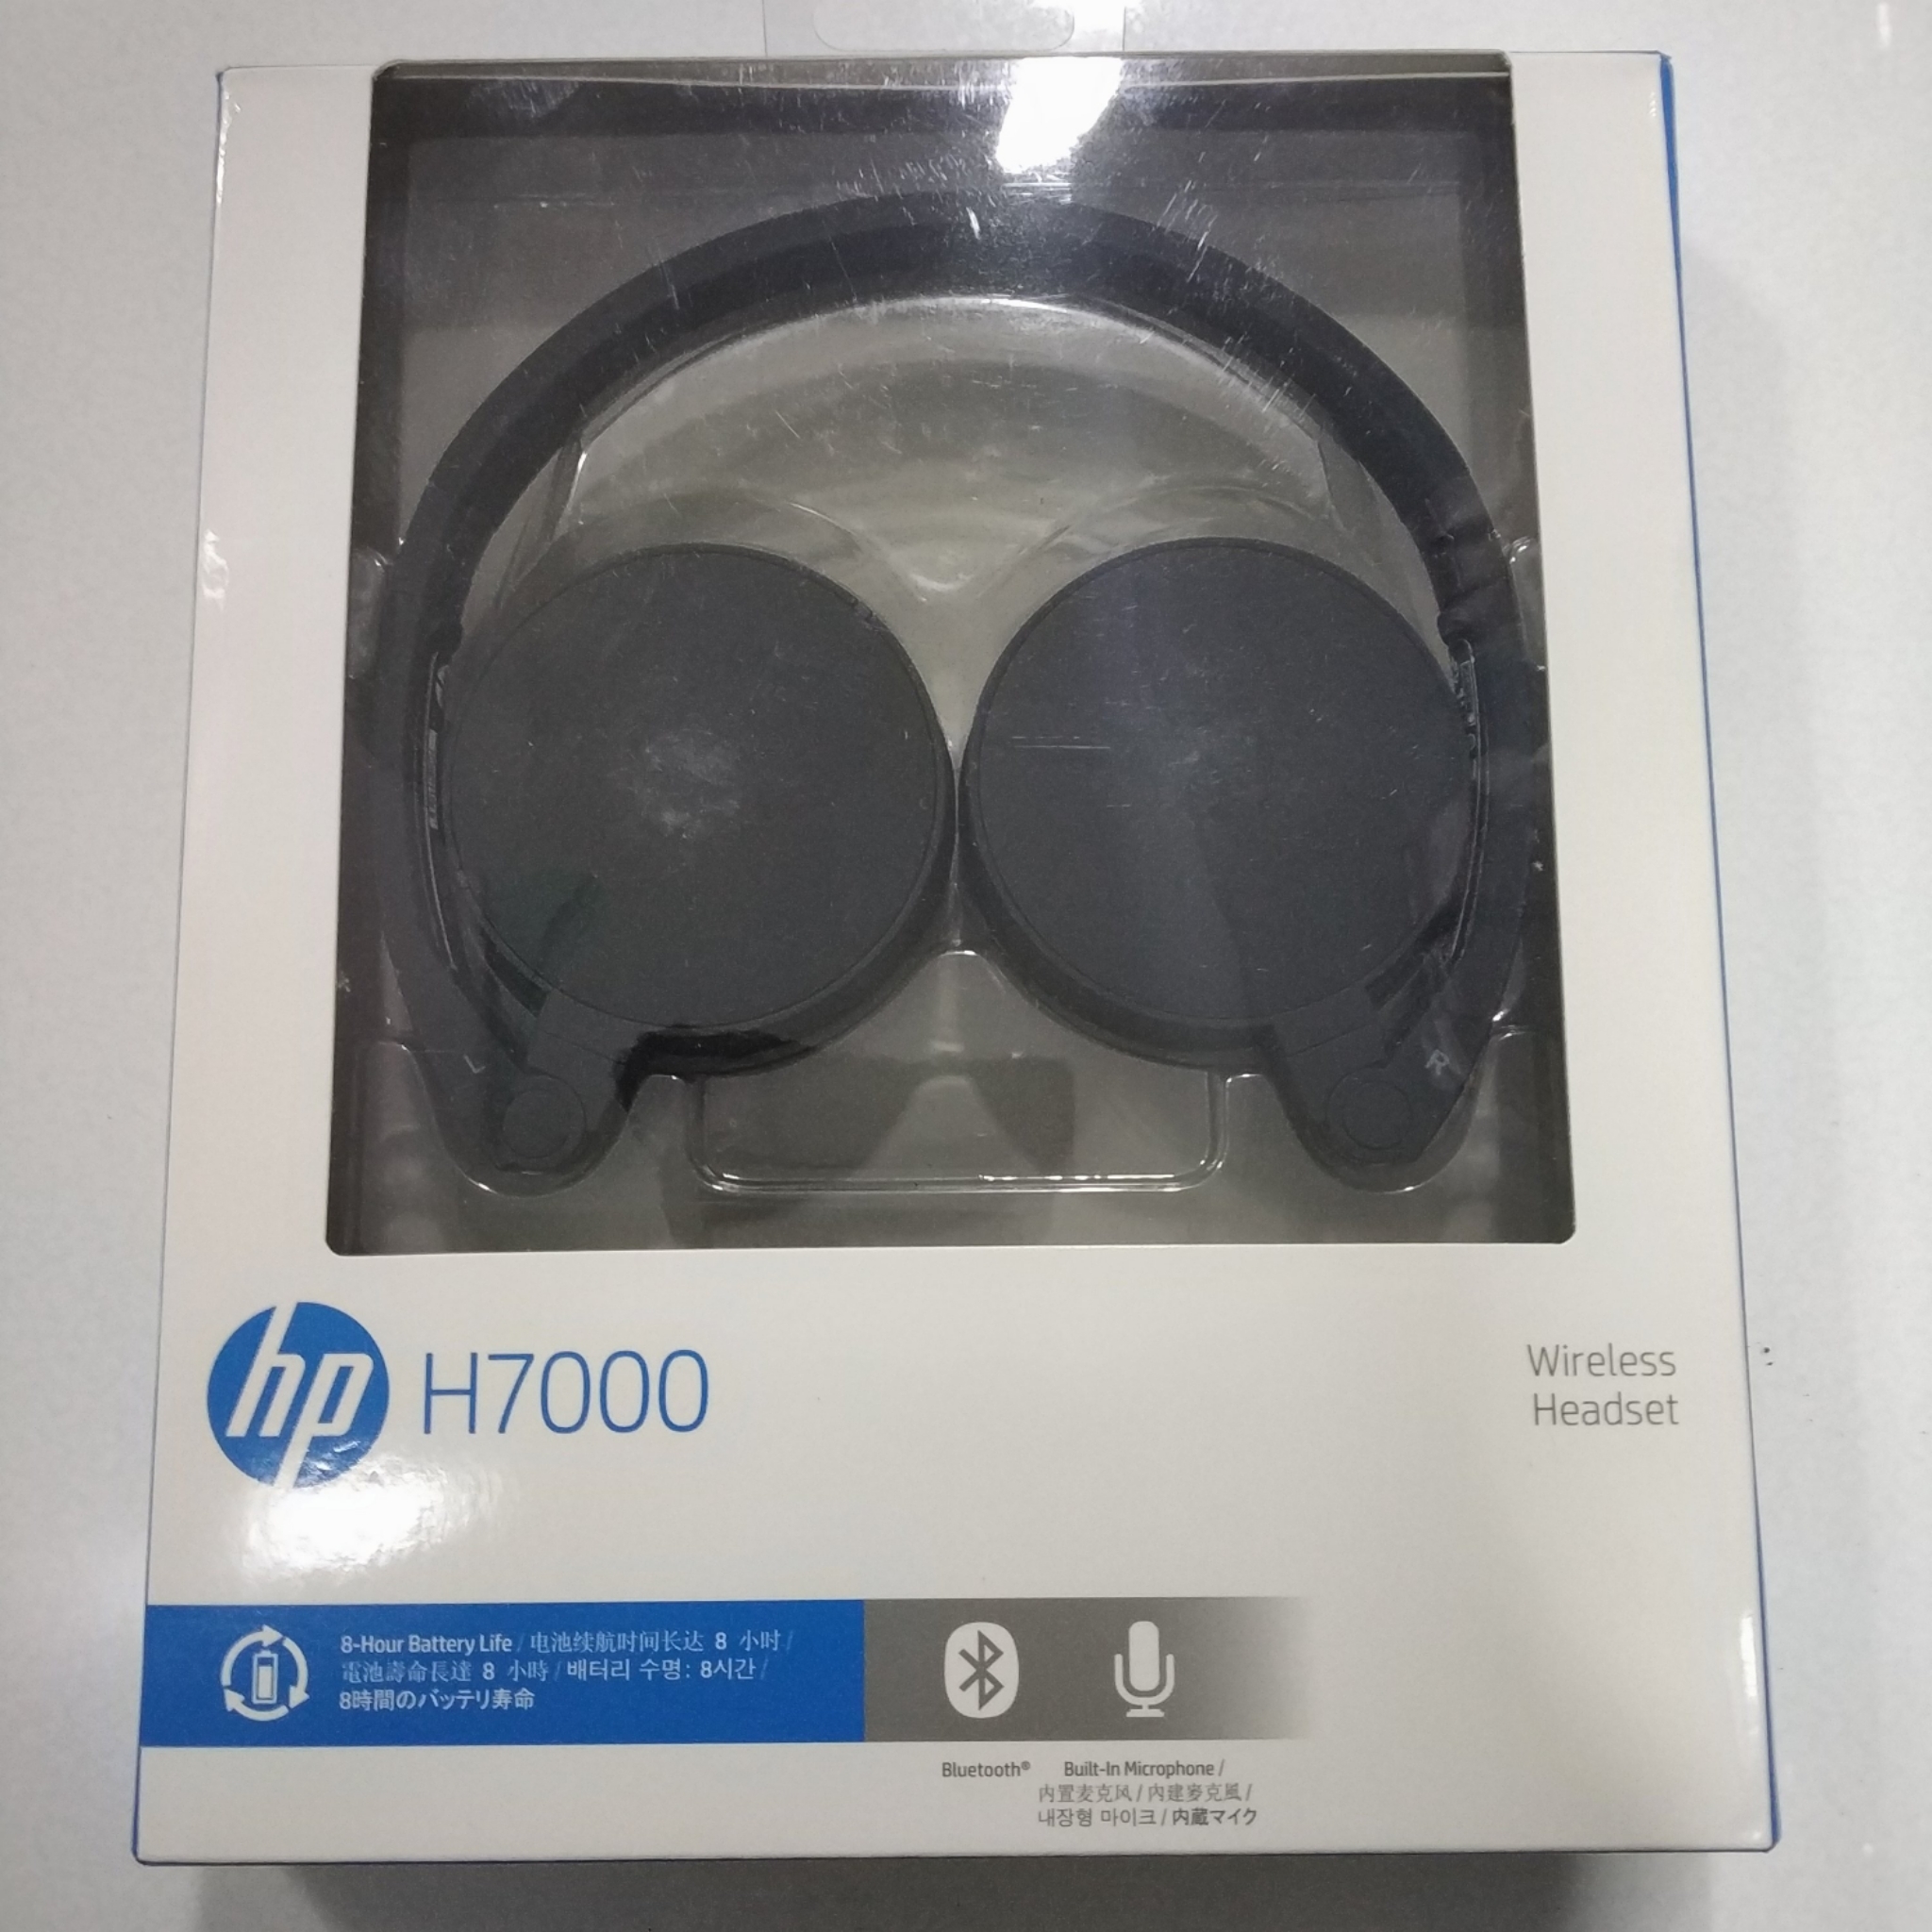 HP H7000 Wireless Headset, Black, H6Z97AA - Rs.3450